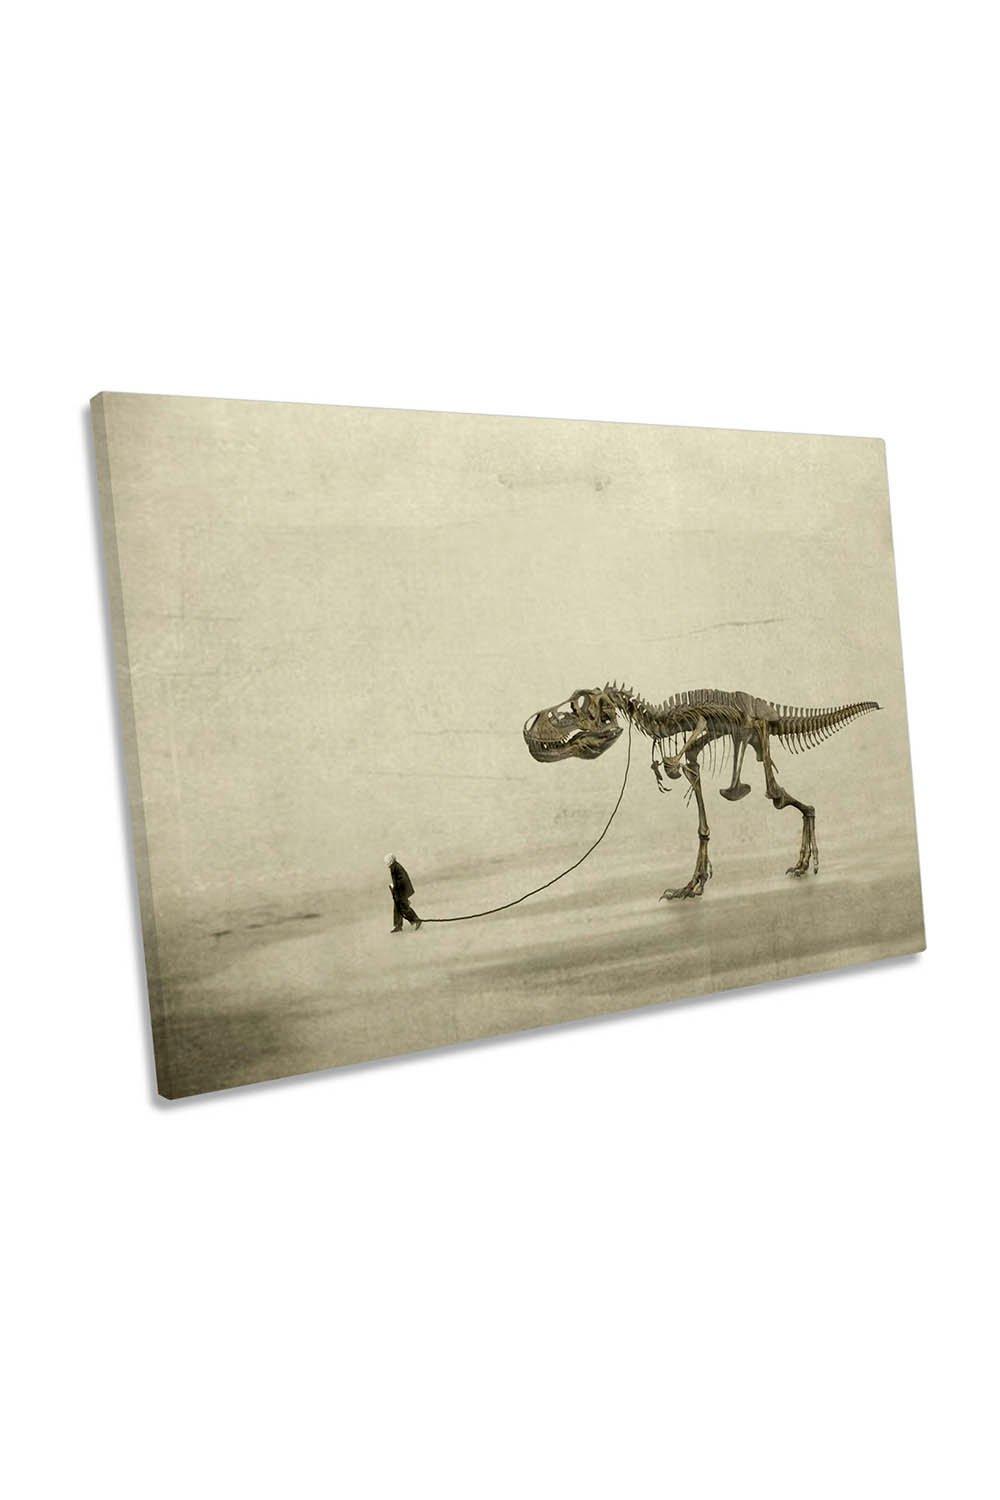 The Dinosaur Walk T-Rex Canvas Wall Art Picture Print